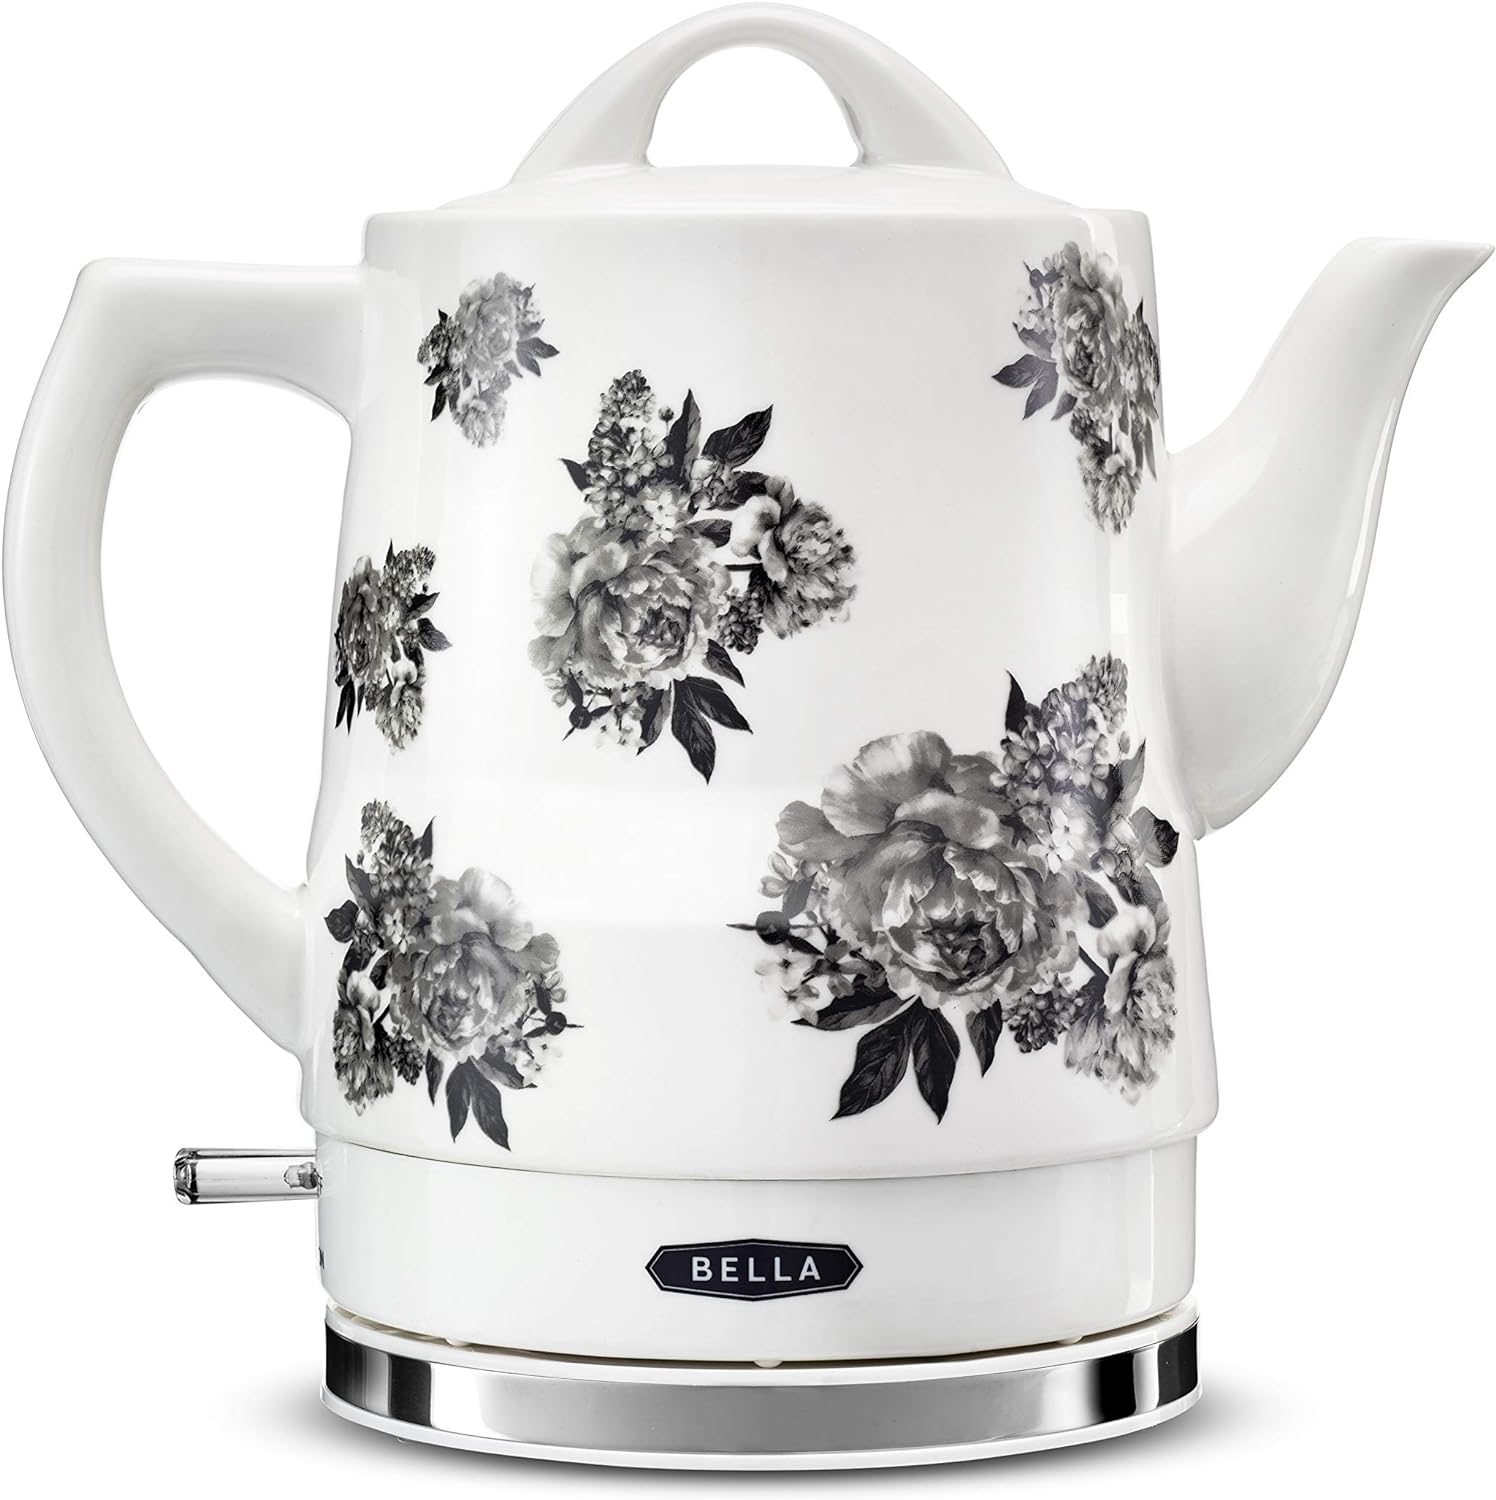 BELLA 1.5 Liter Electric Ceramic Tea Kettle with Boil Dry Protection & Detachable Swivel Base, Black Floral